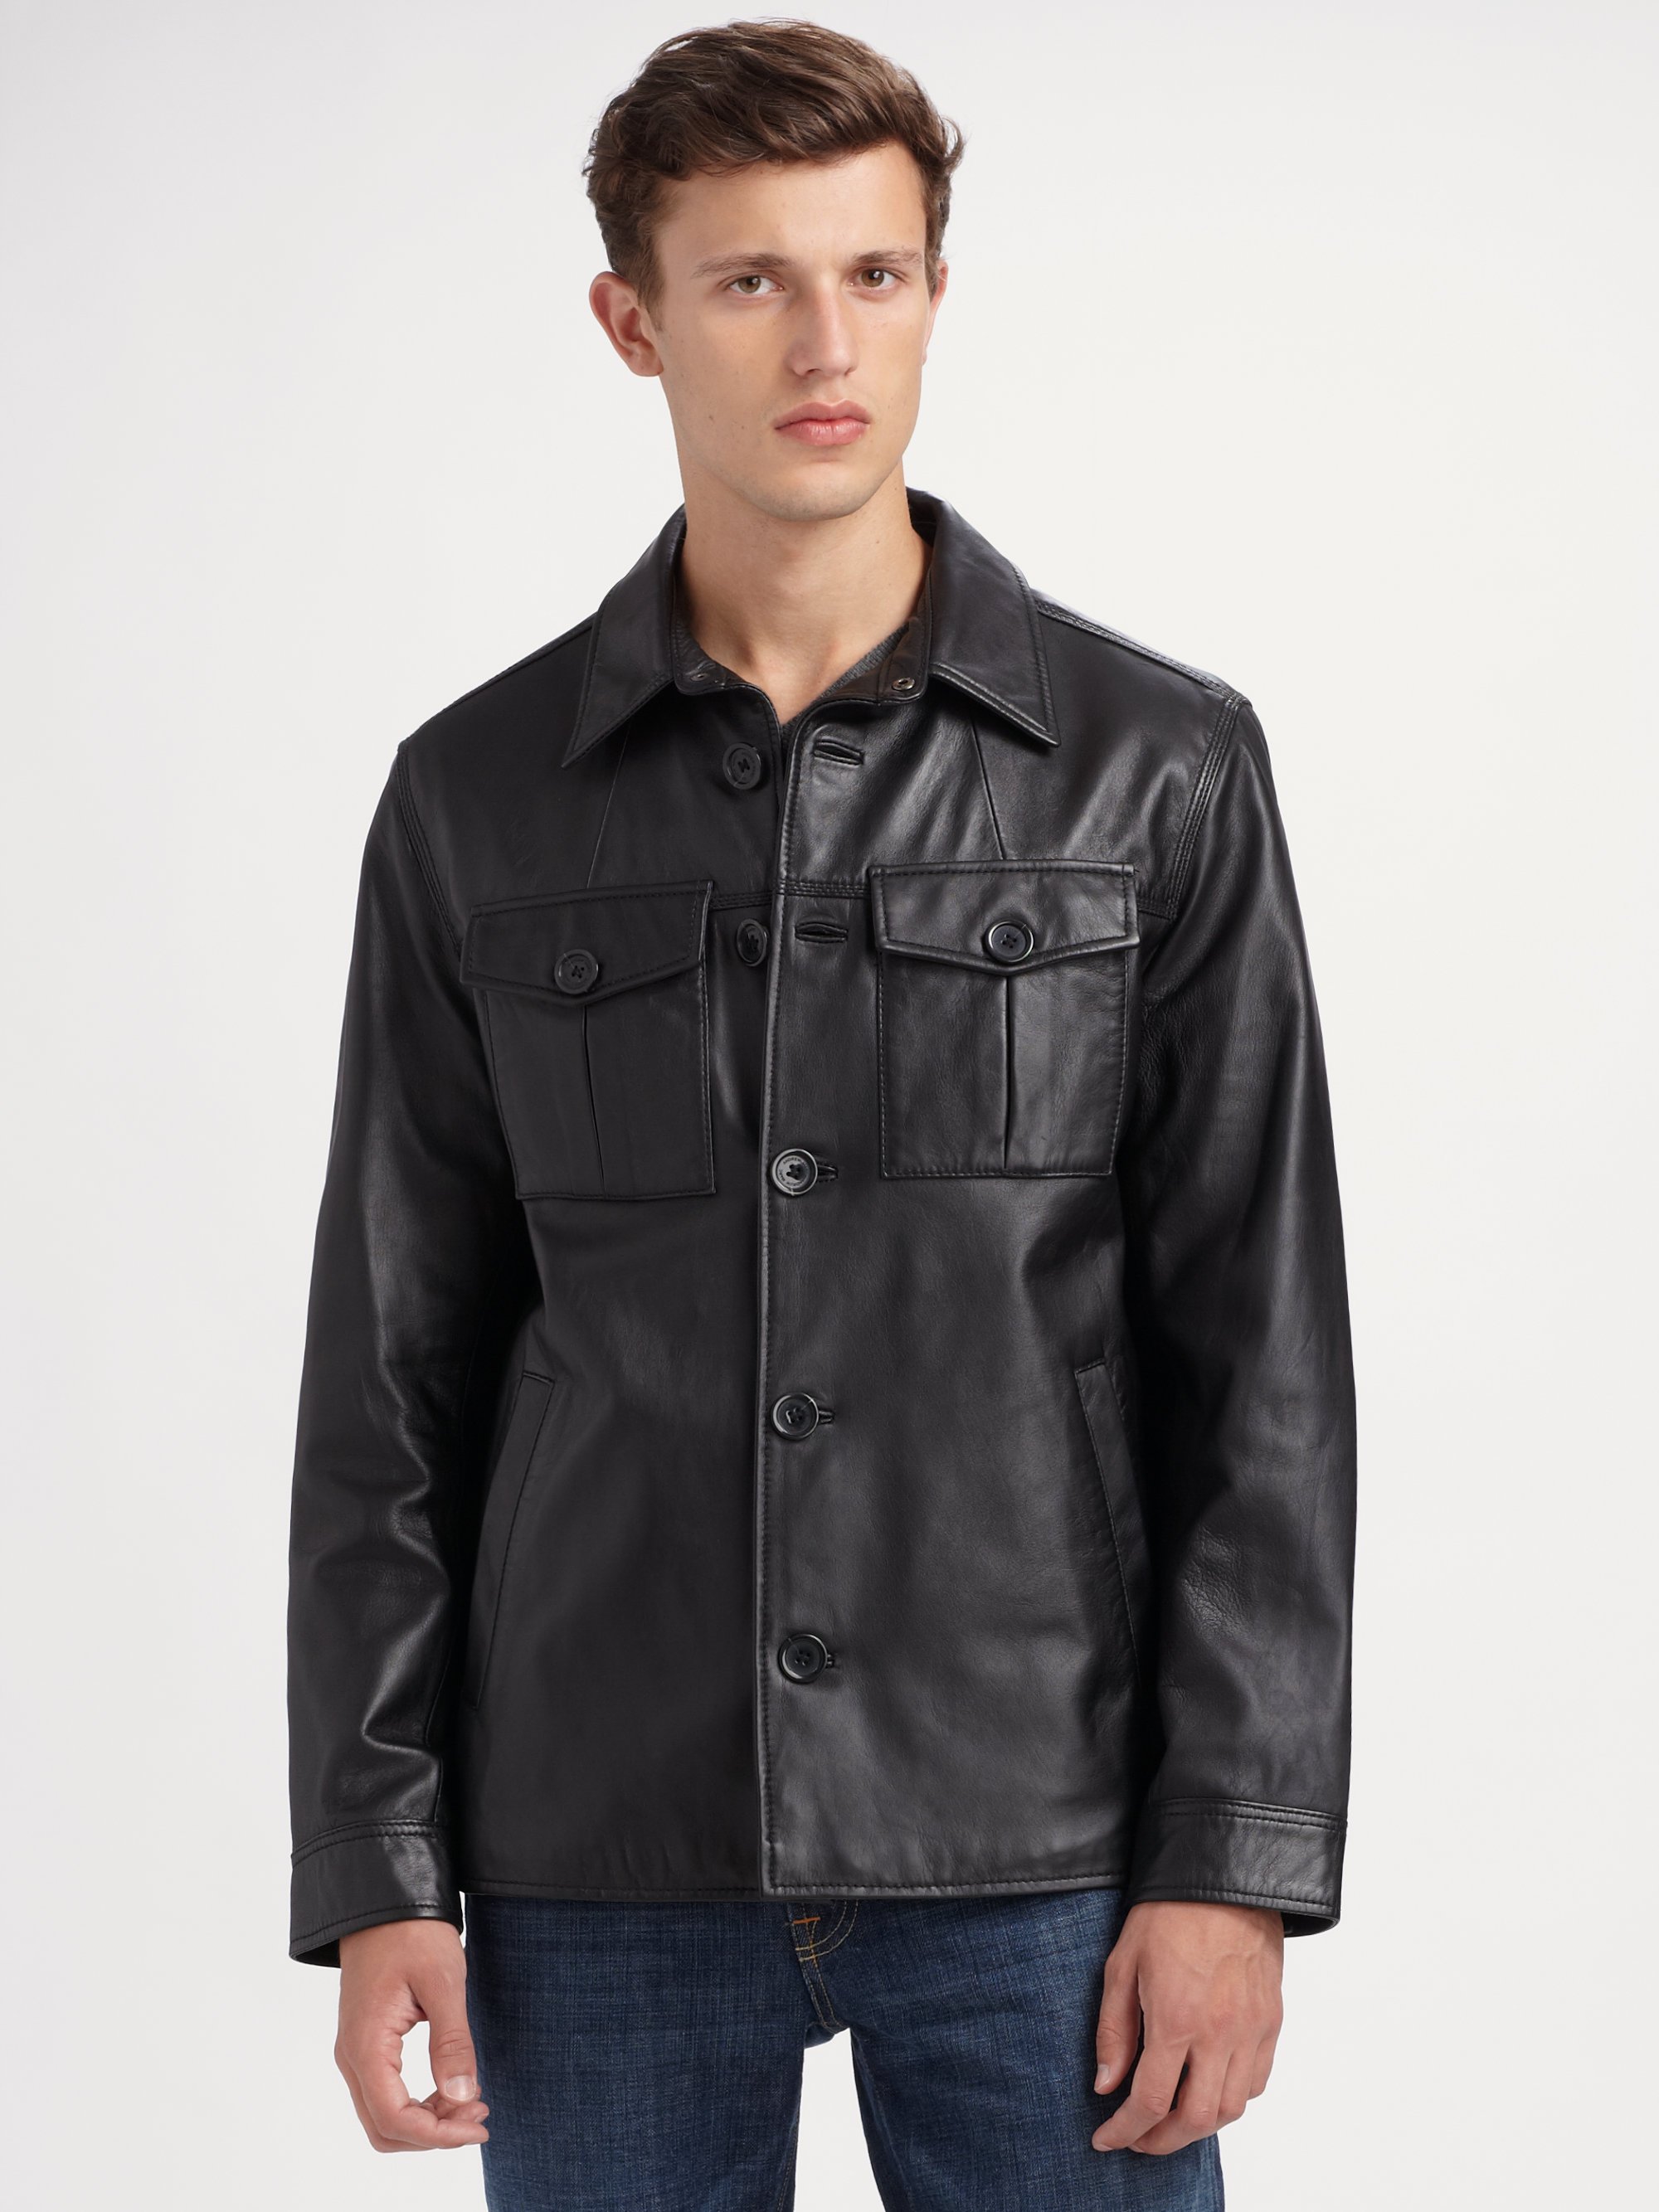 Andrew marc James Leather Shirt Jacket in Black for Men | Lyst